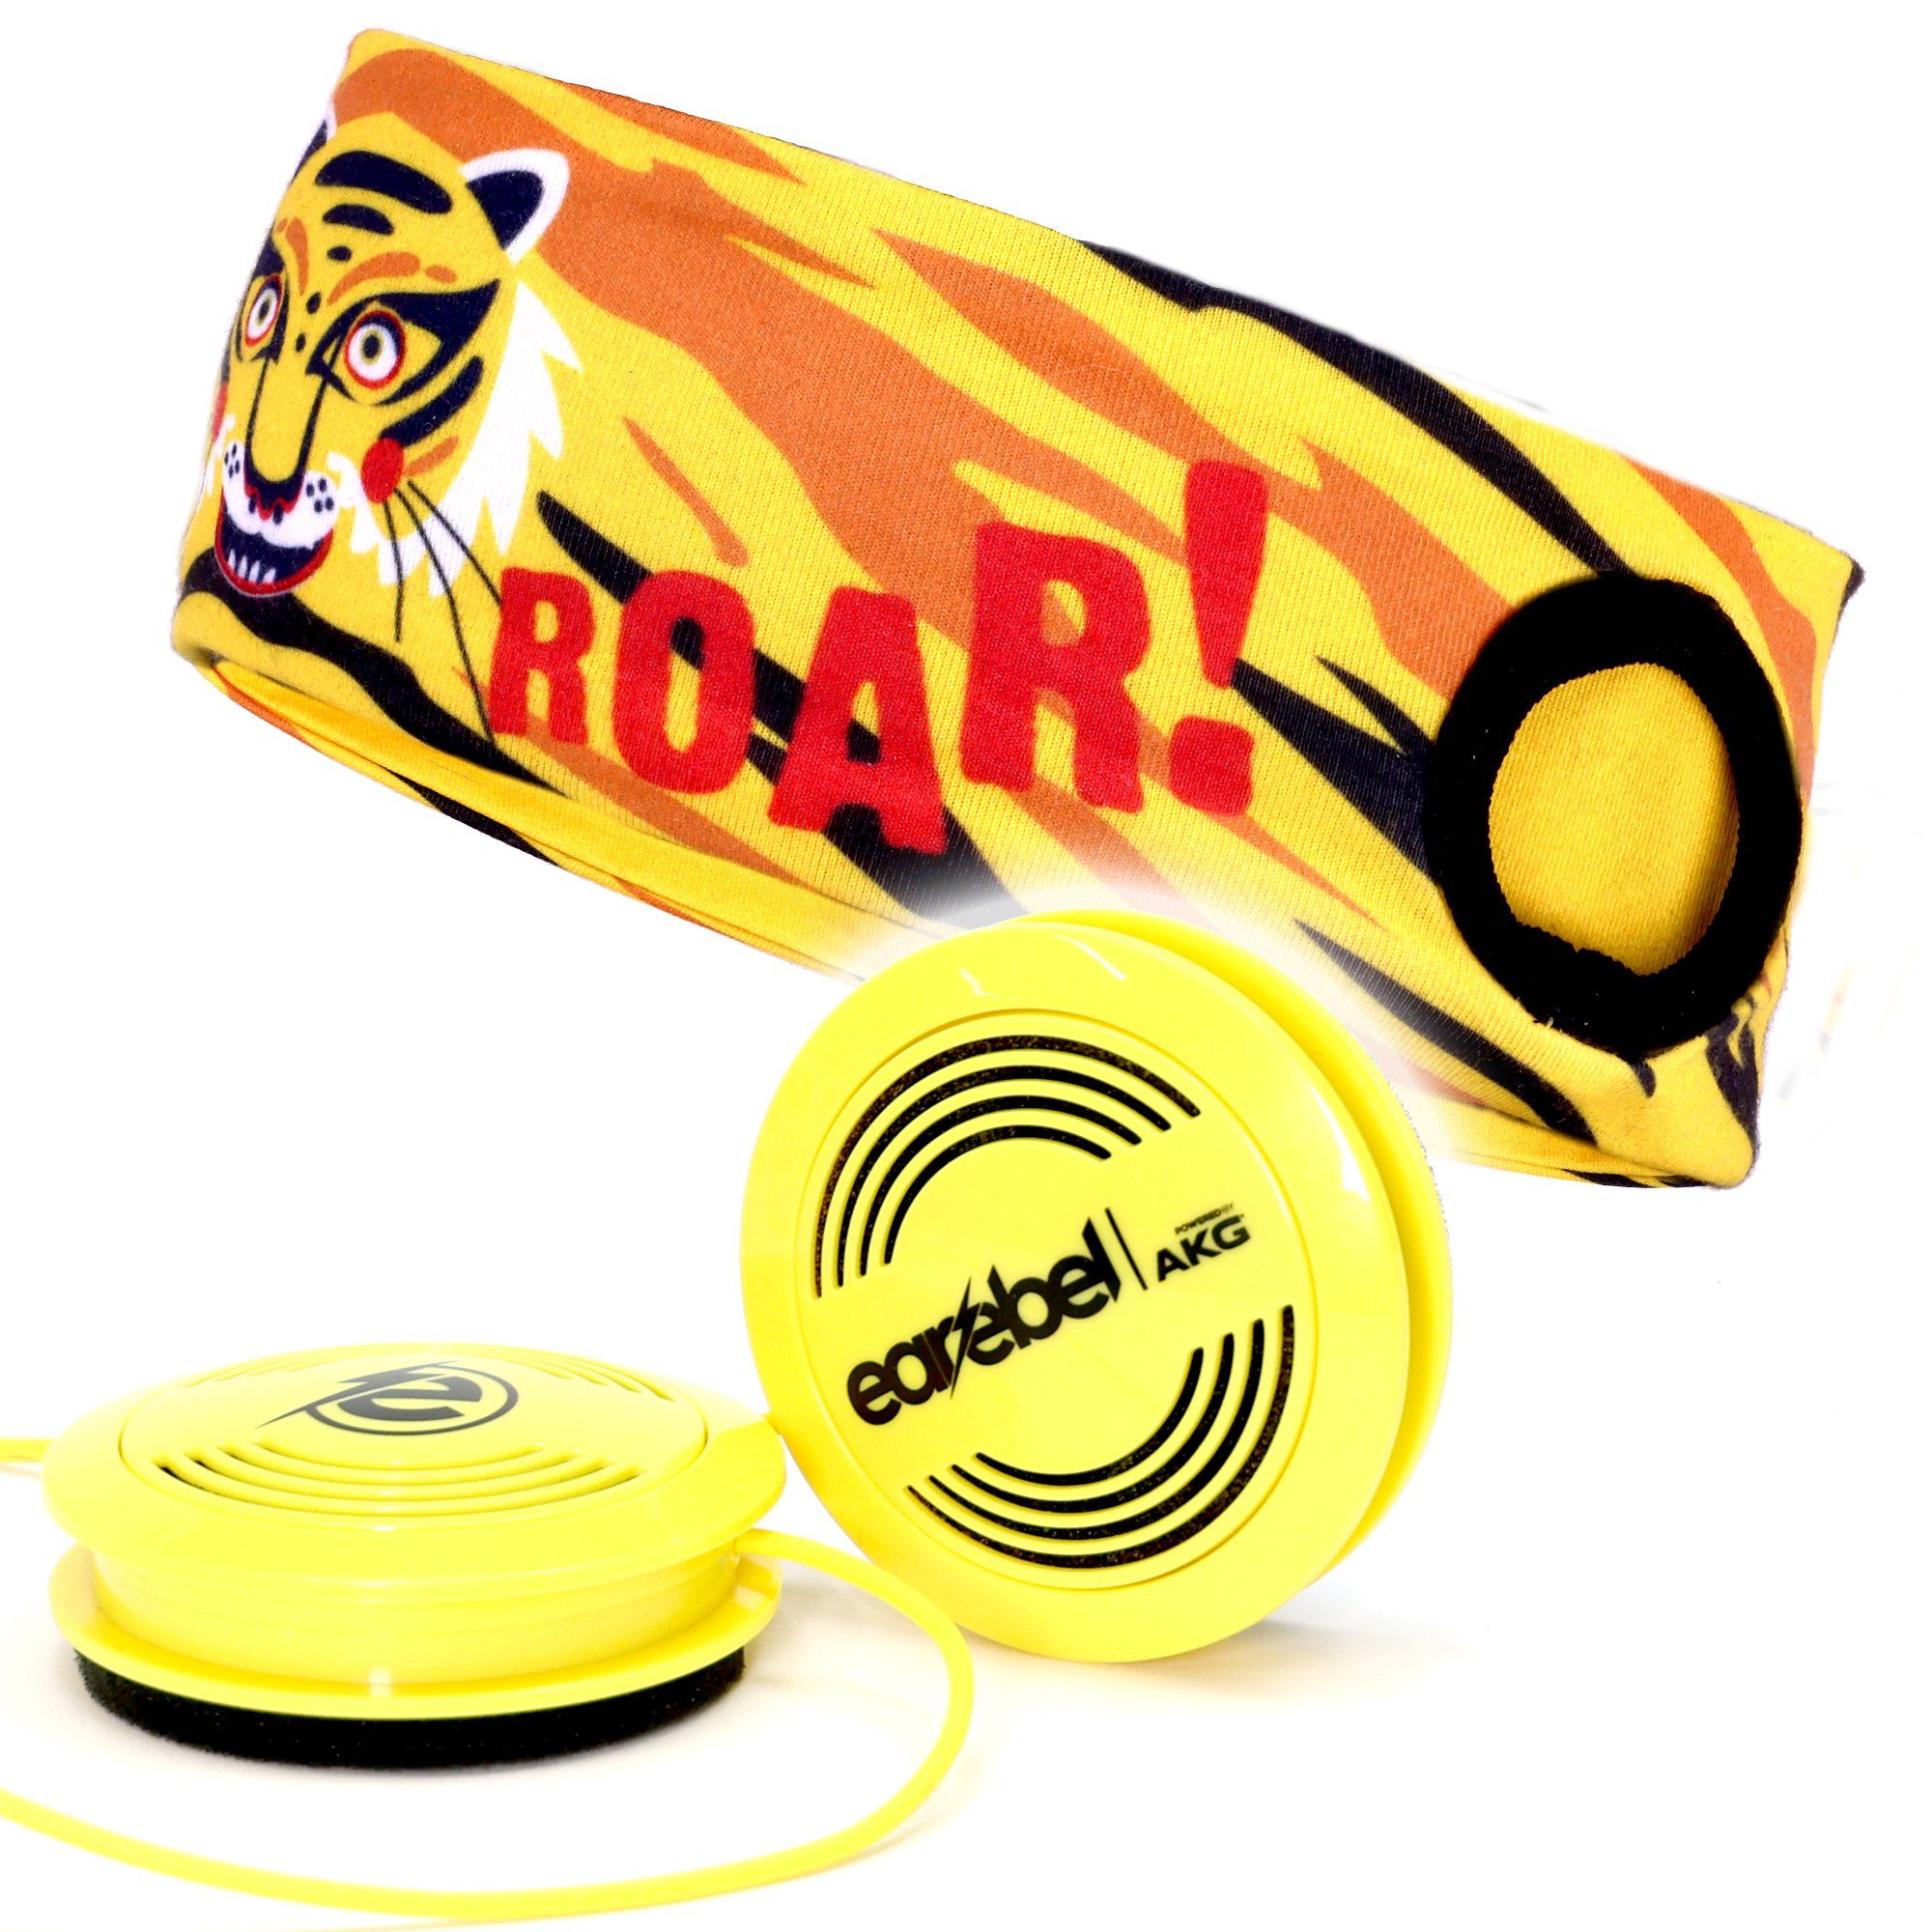 earebel Earebel Kinderkopfhörer - Set Tiger Gelb mit AKG Kopfhörern gelb Kopfhörer